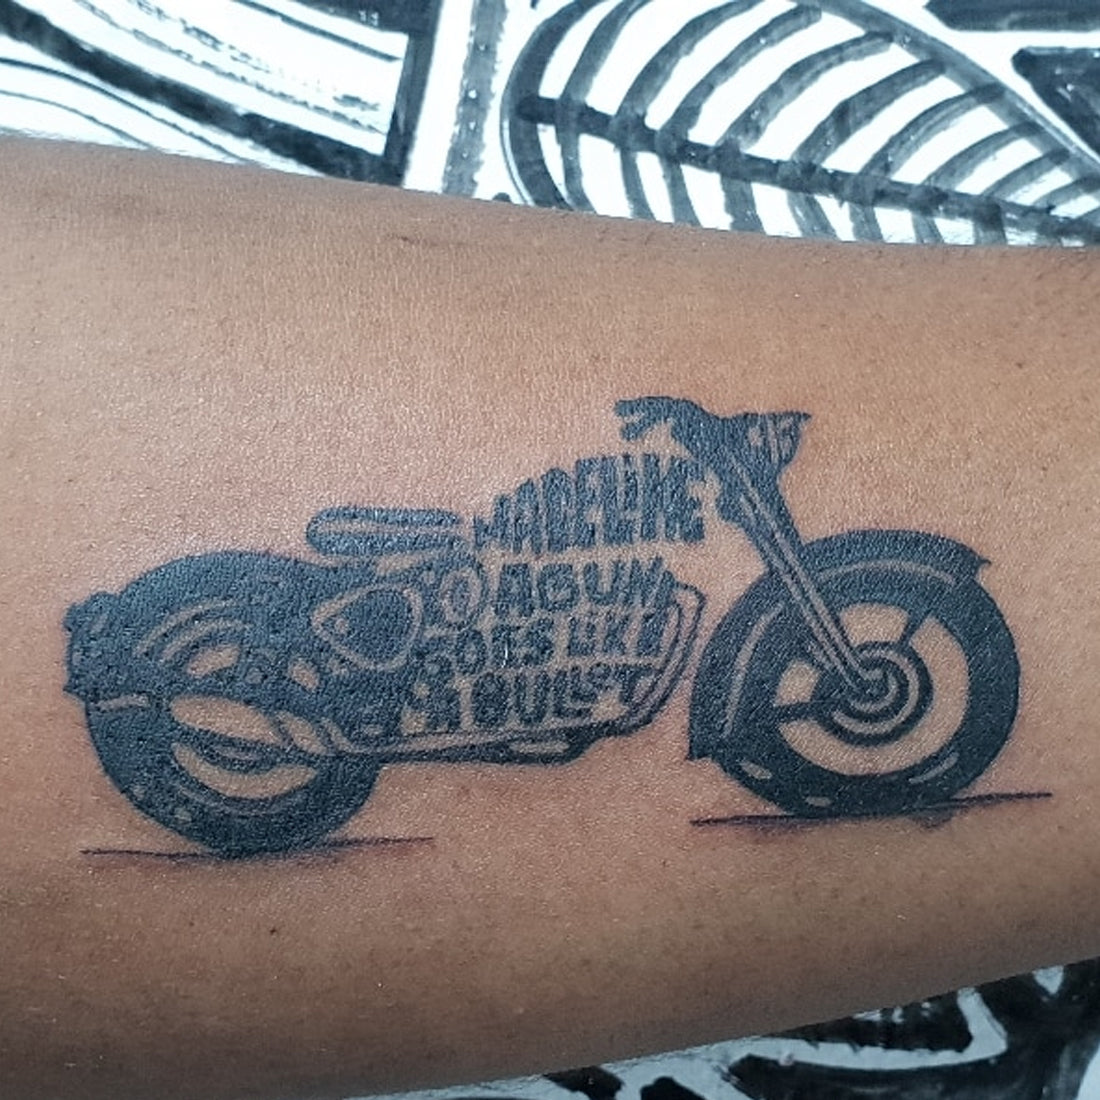 Motocross Tattoos  Dirt Bike Tattoo Ideas For Racing Moto Folk